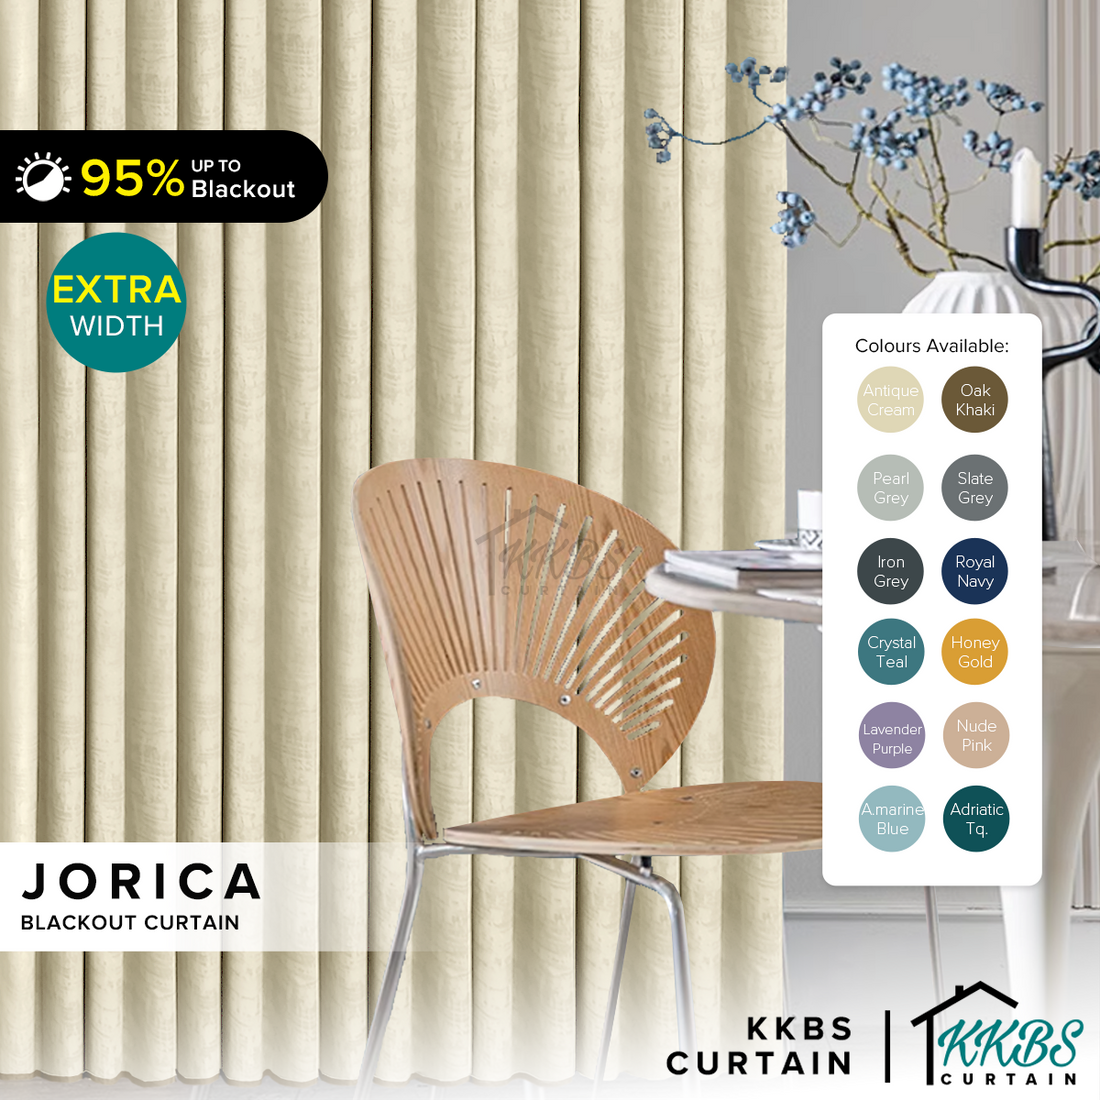 Jorica 85-95% Blackout Curtain Ready Made Extra Width